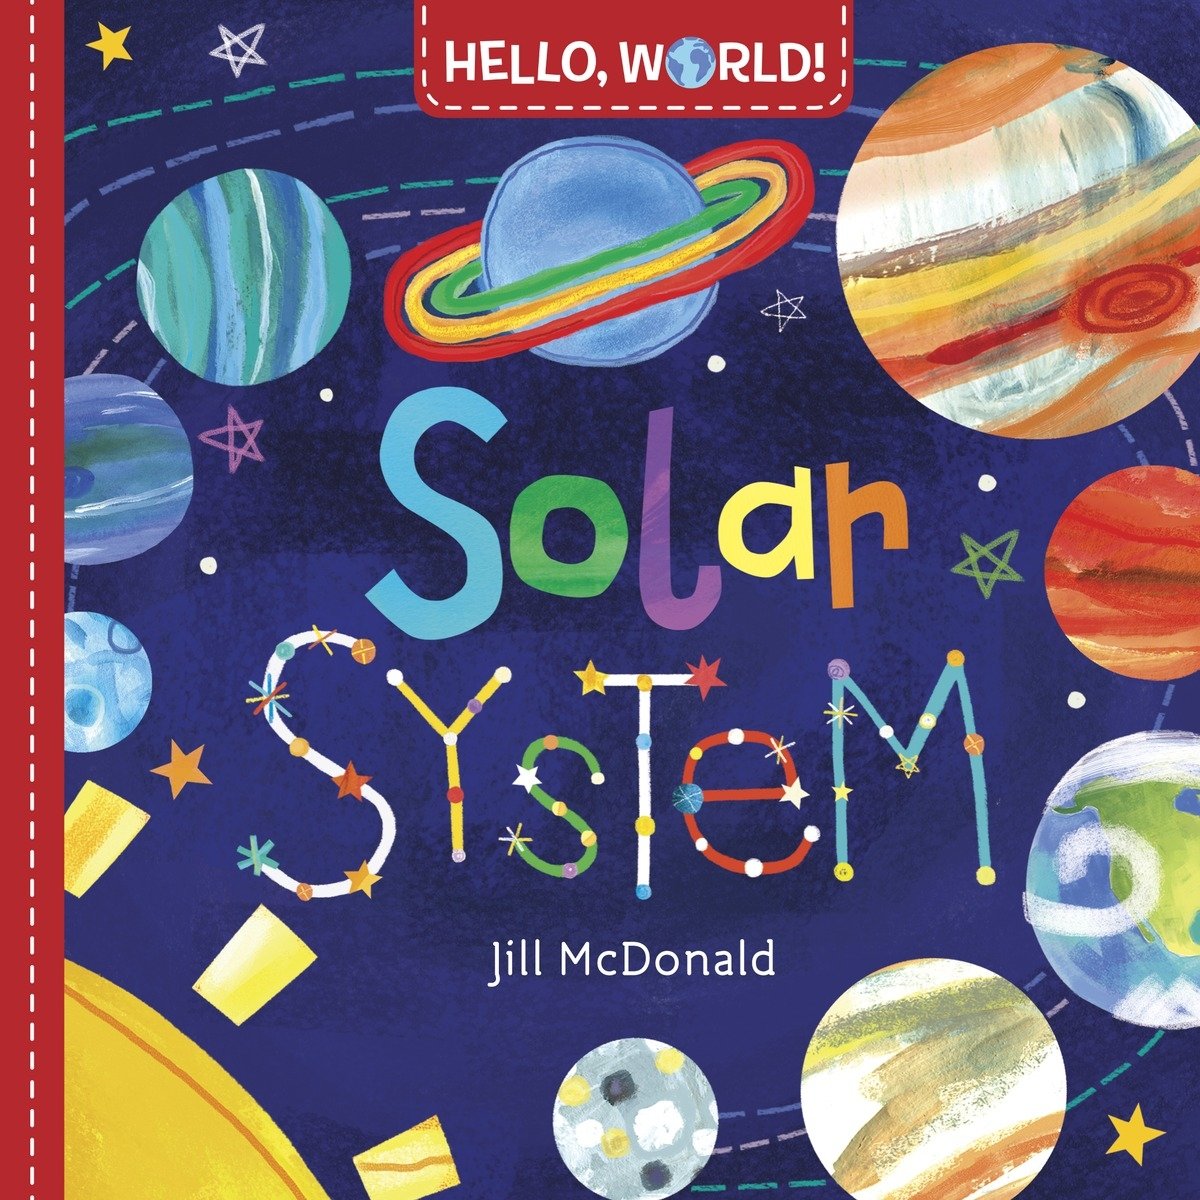 HELLO-WORLD-SOLAR-SYSTEM-1